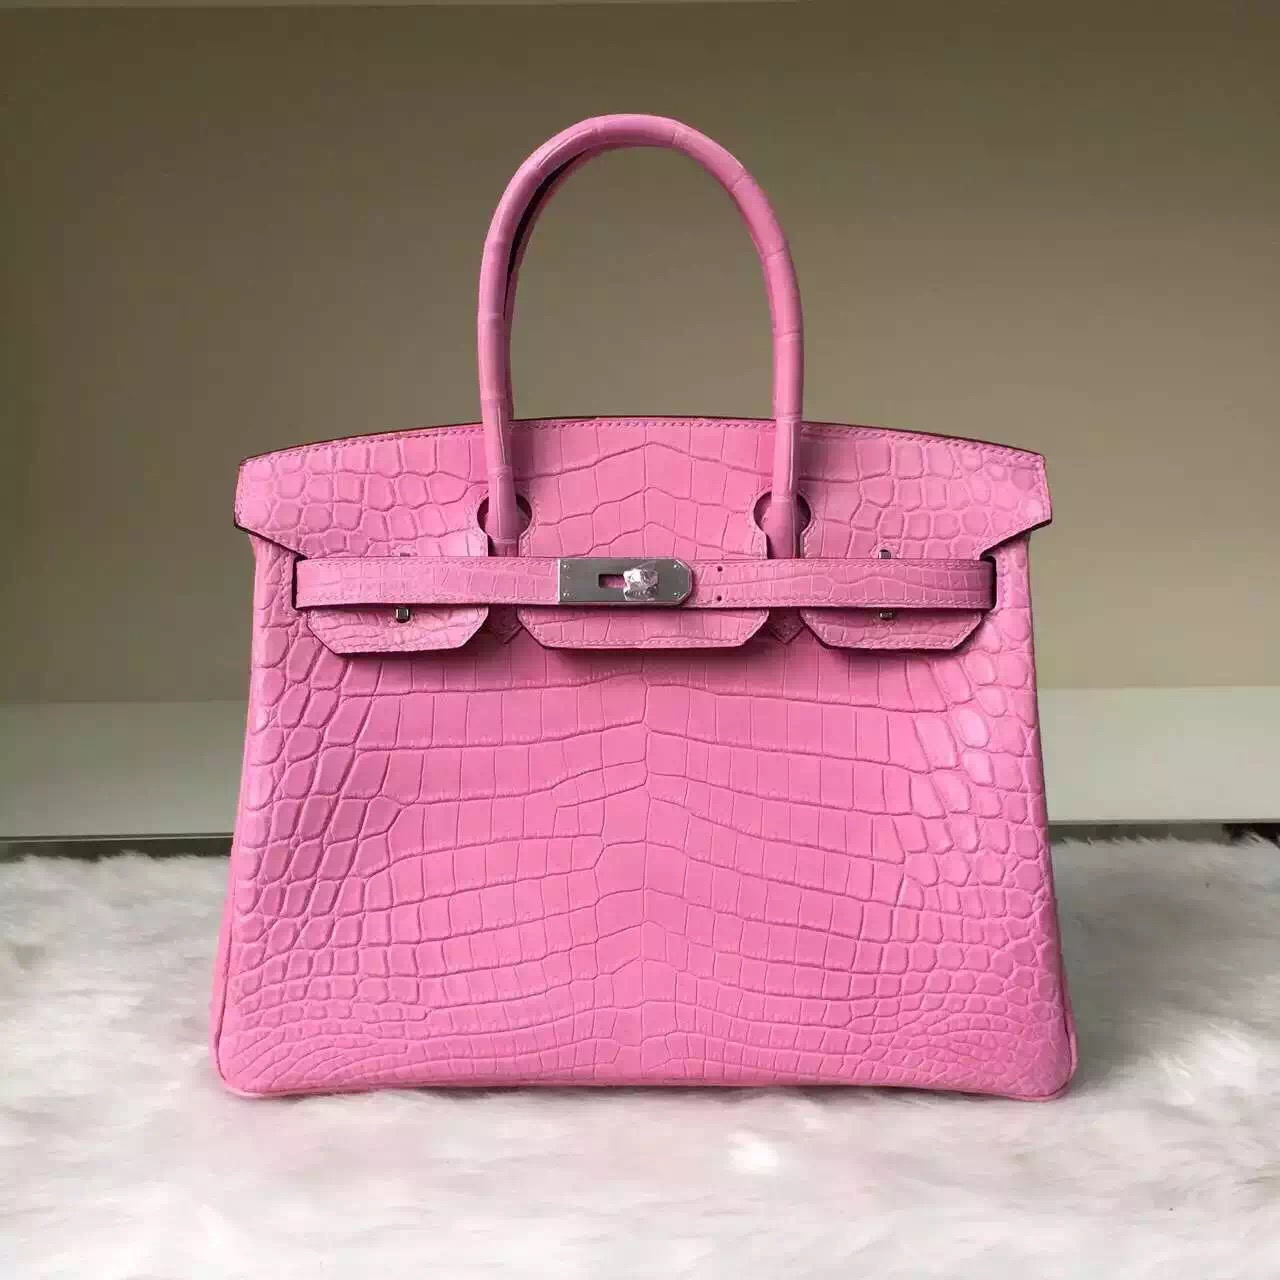 Online Store Hermes Matt Crocodile Leather Birkin30 Bag in Sakura Pink